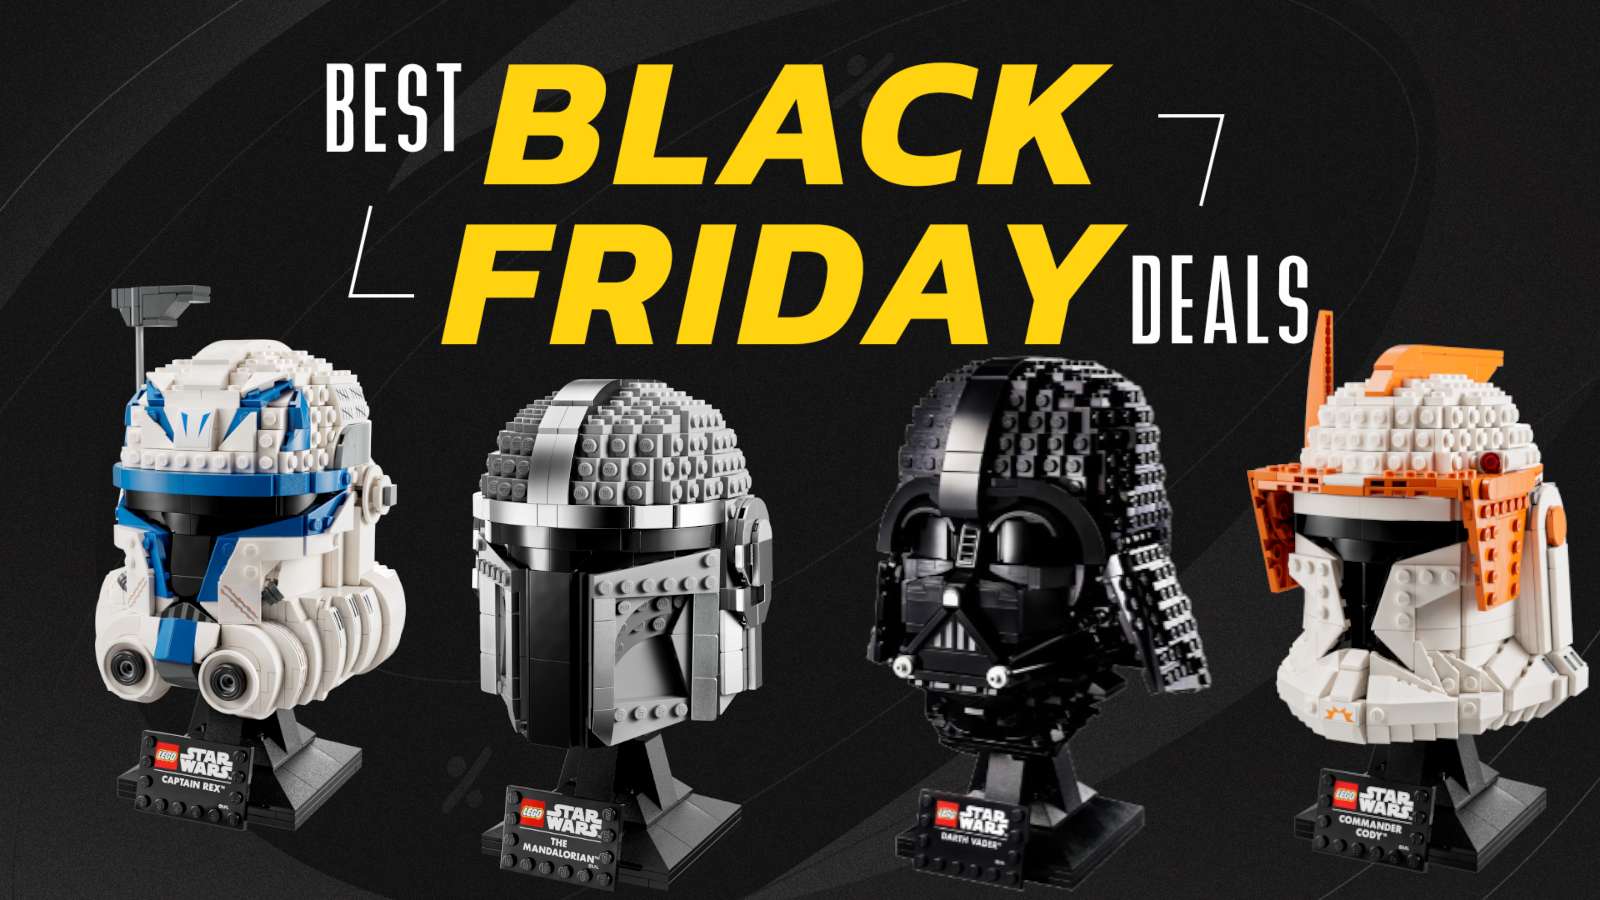 Black friday deals best buy LEGO Star Wars helmets cover image